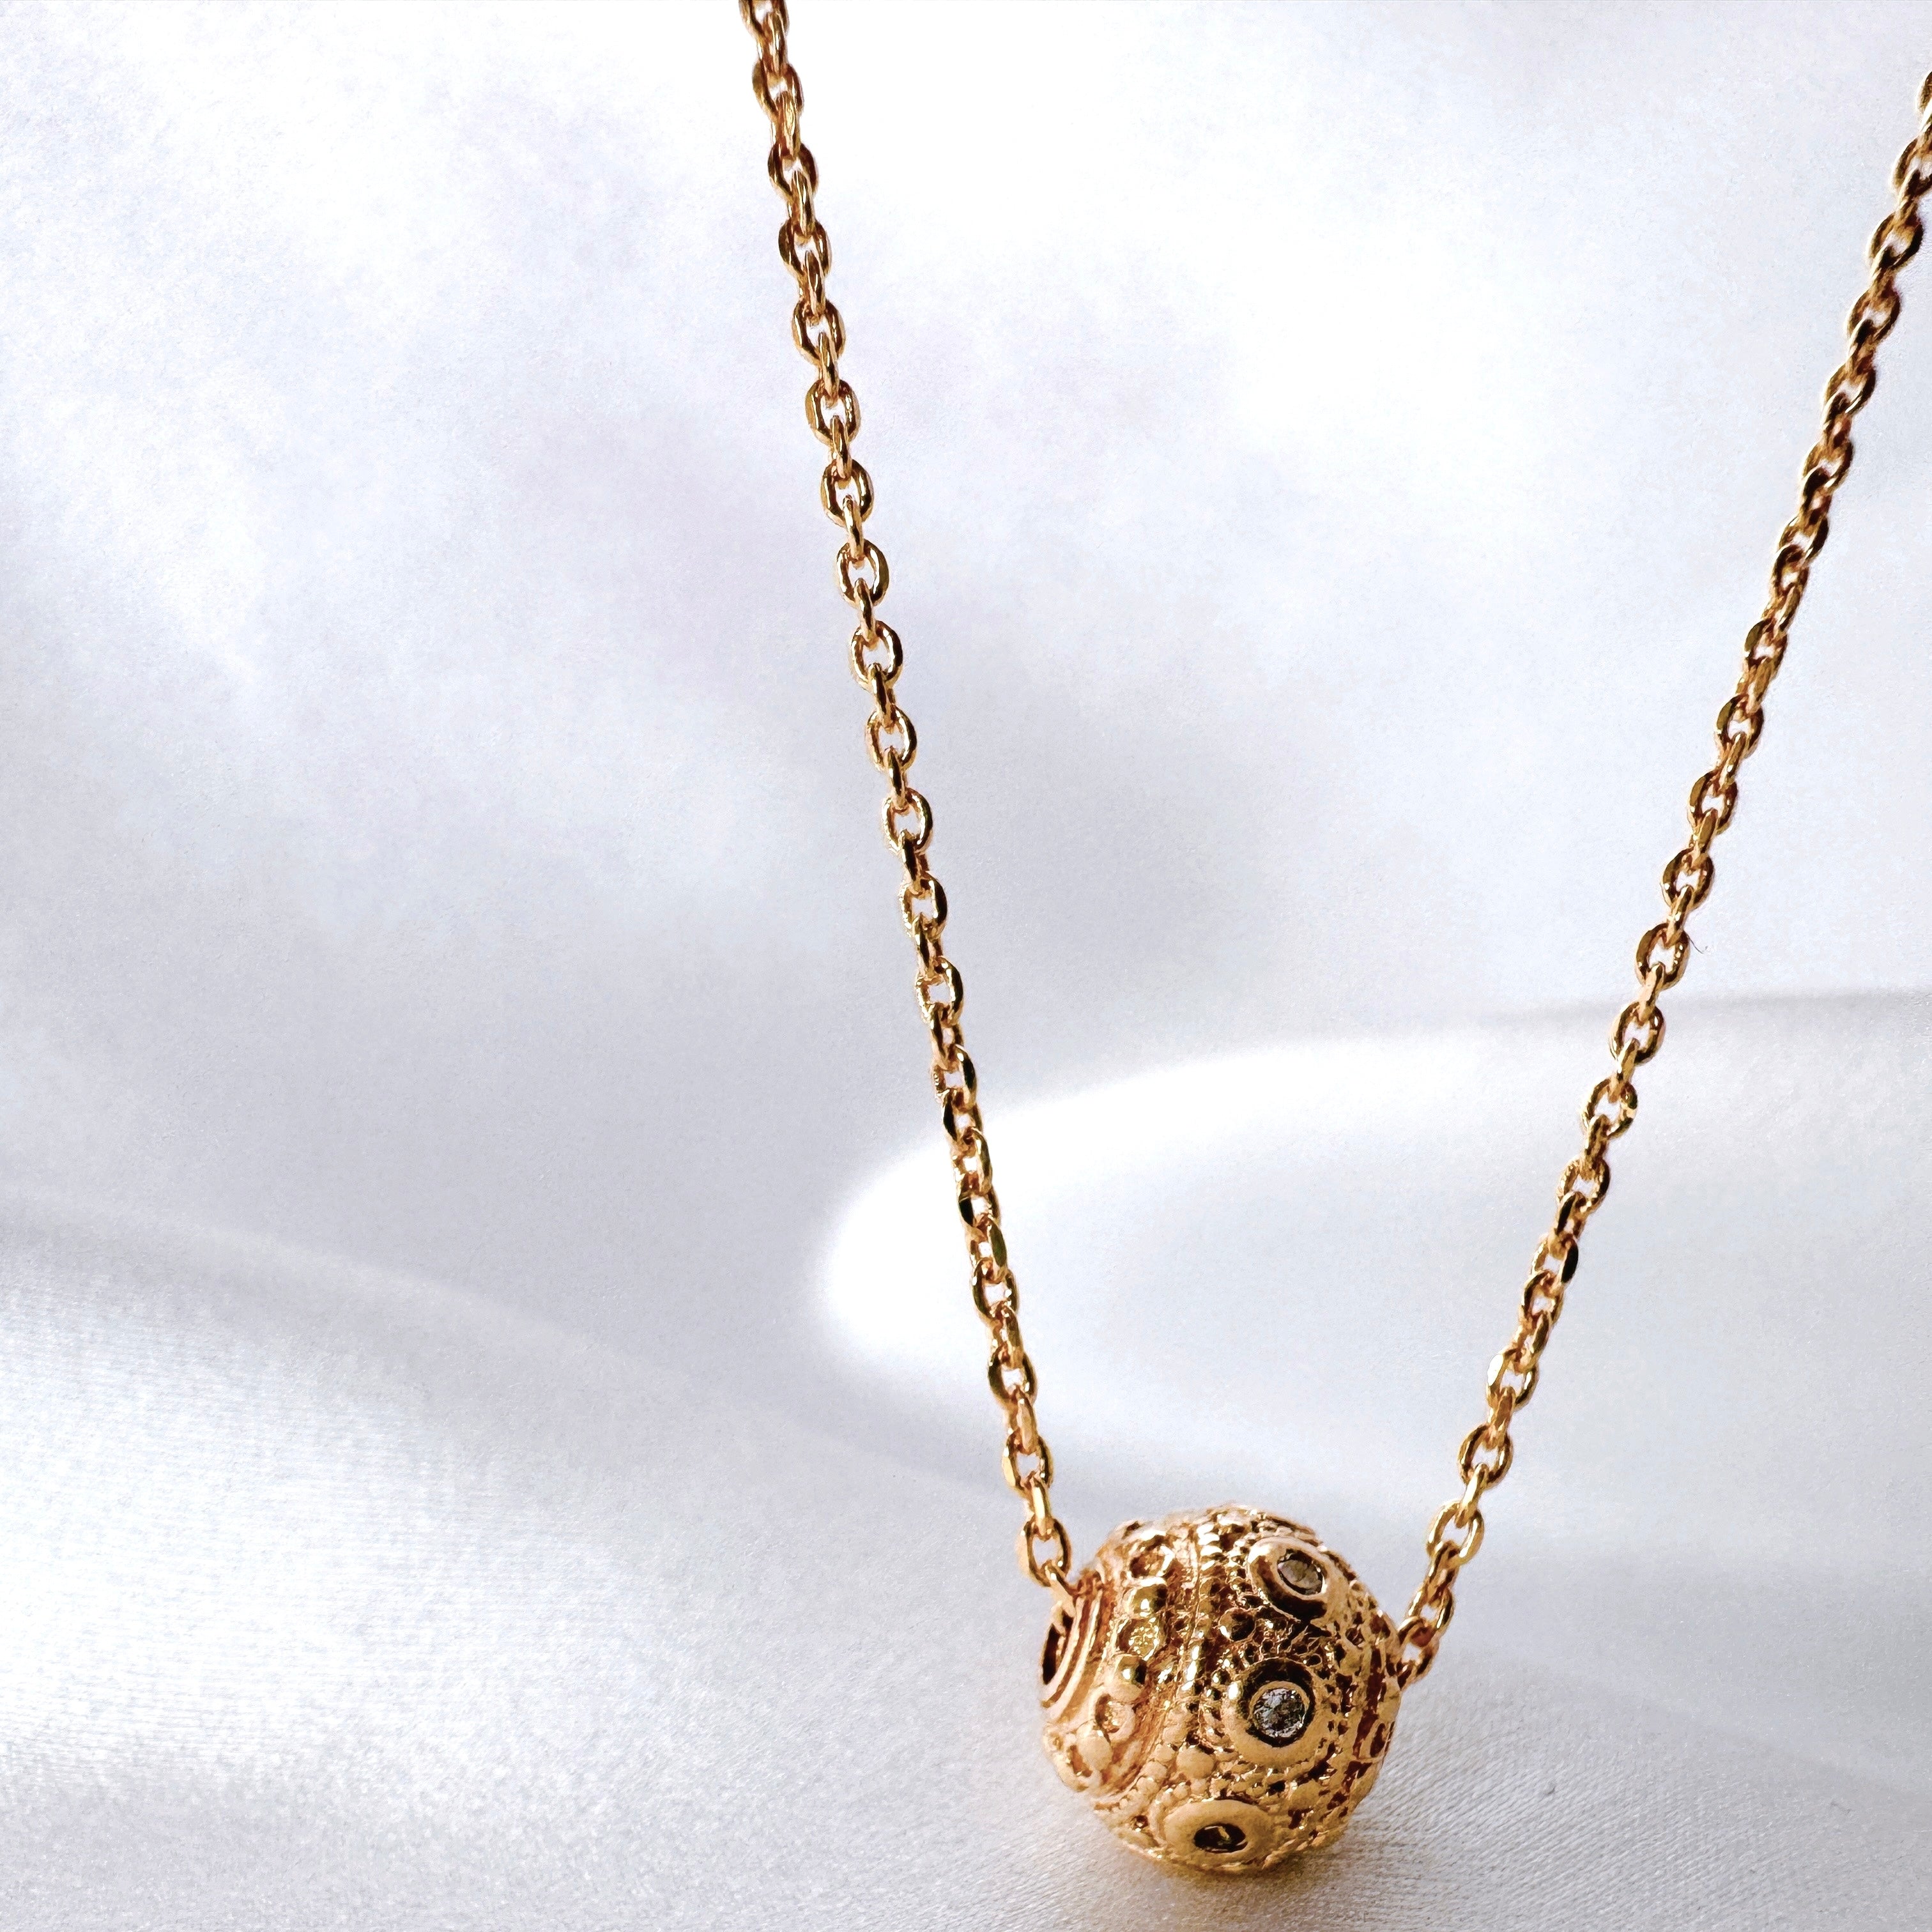 Gold-plated “Amaya” necklace